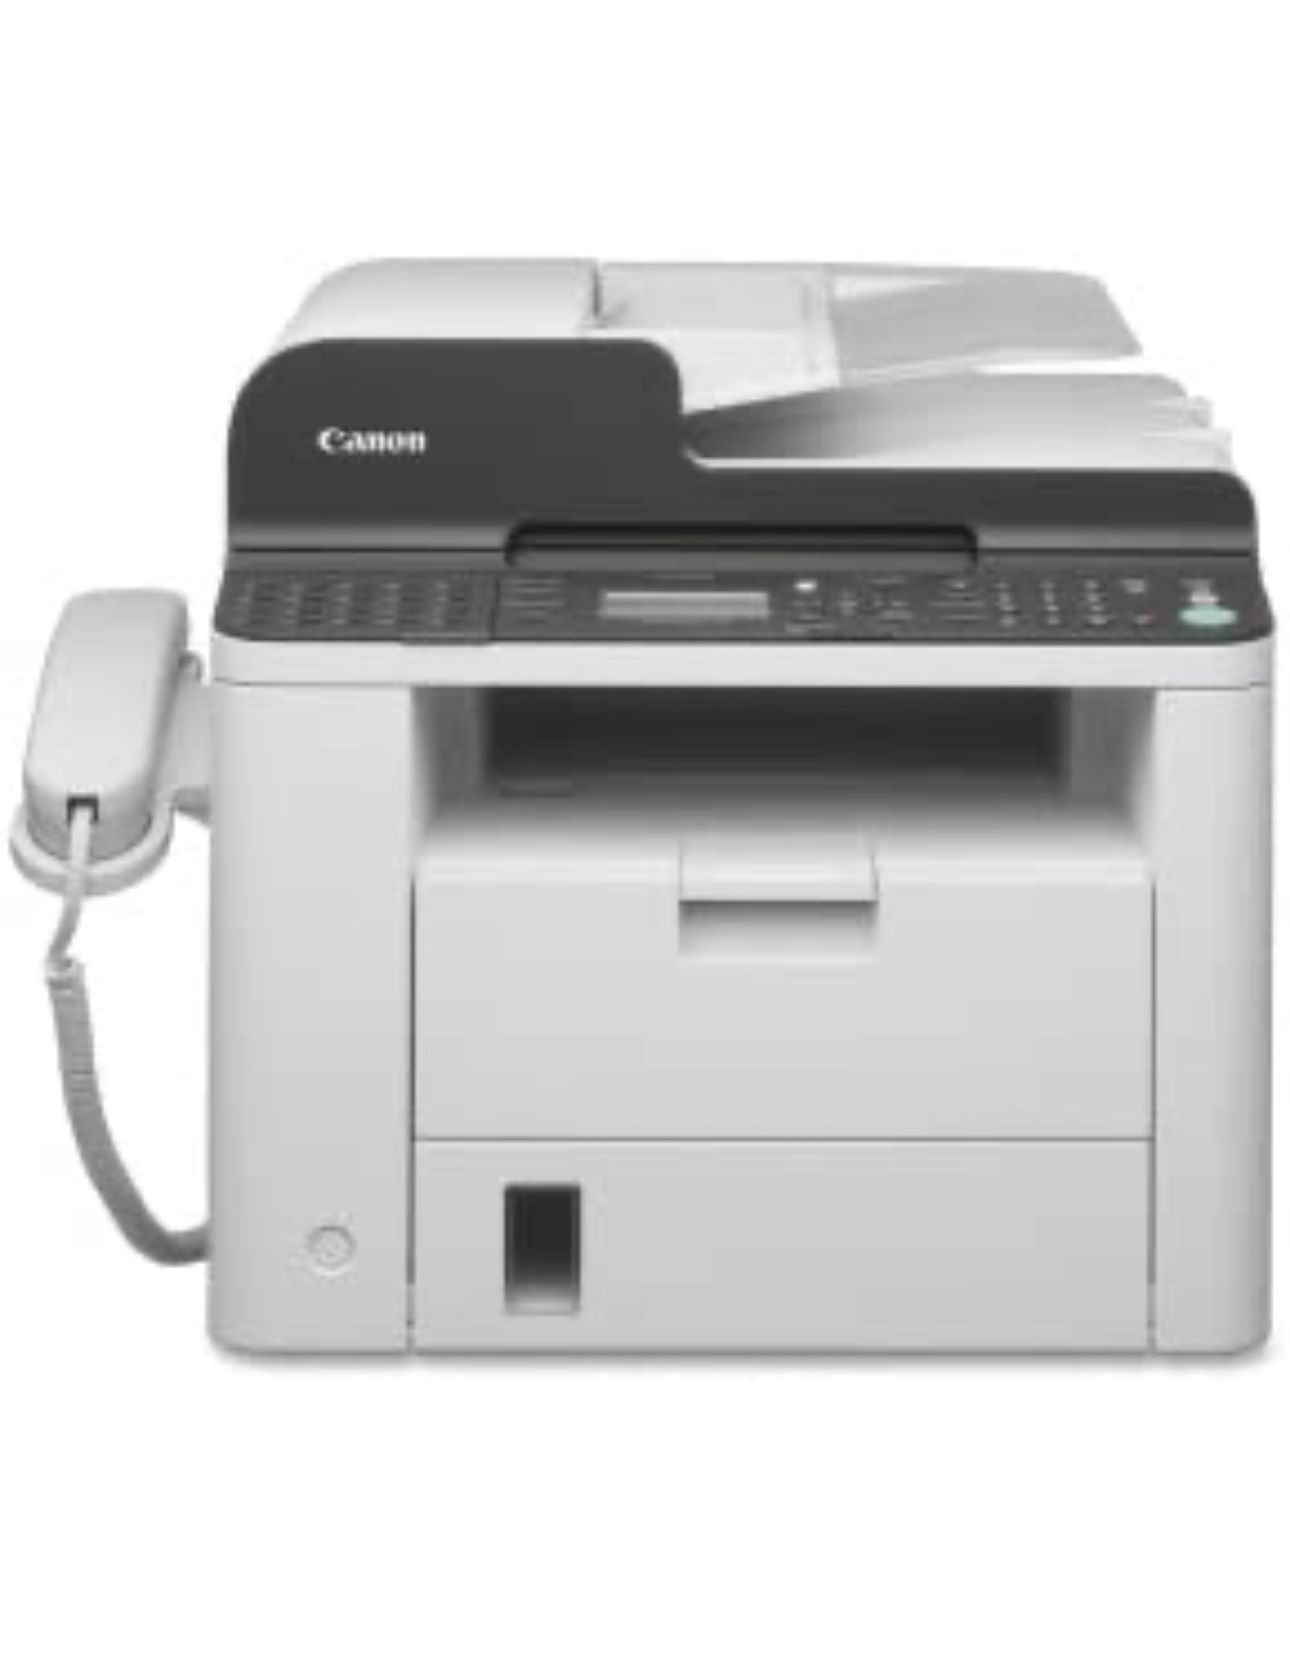 Canon Lasers FAXPHONE L190 Wireless Monochrome Printer with Copier and Fax